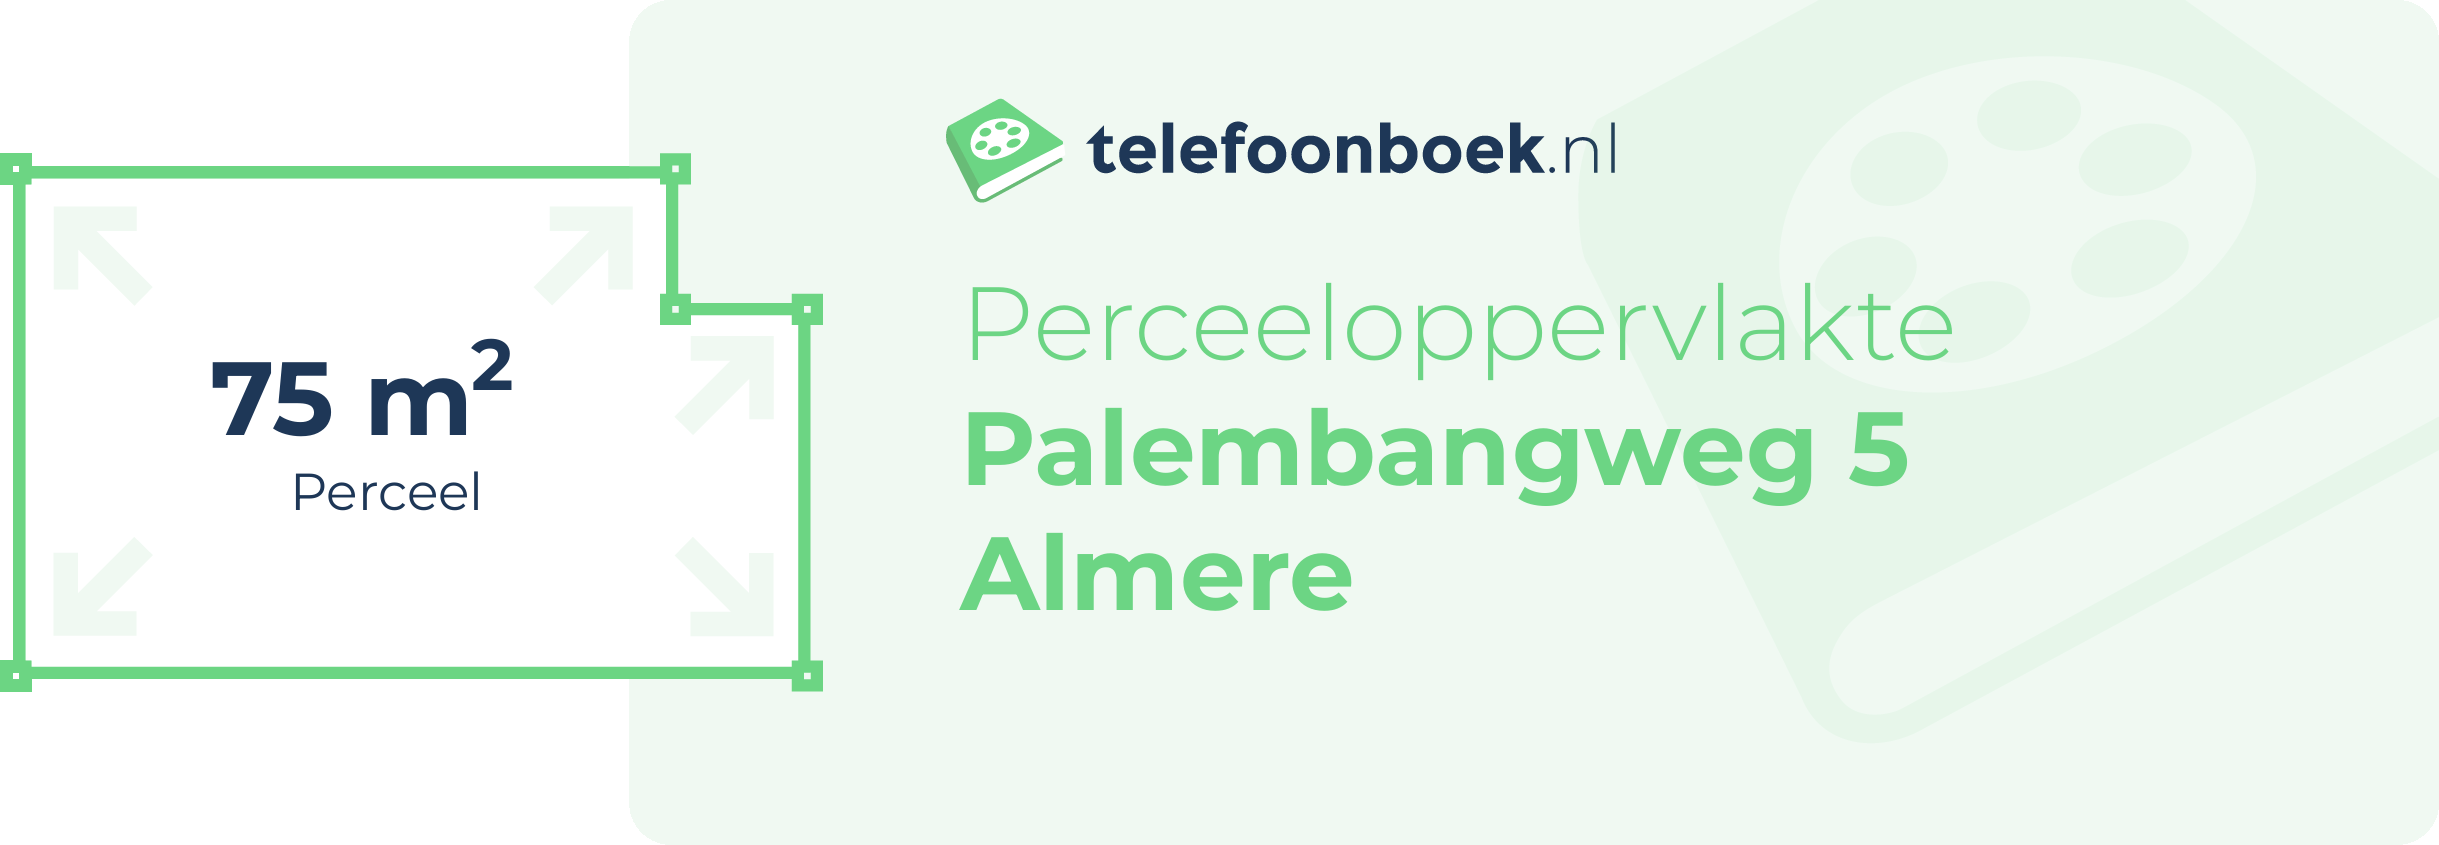 Perceeloppervlakte Palembangweg 5 Almere